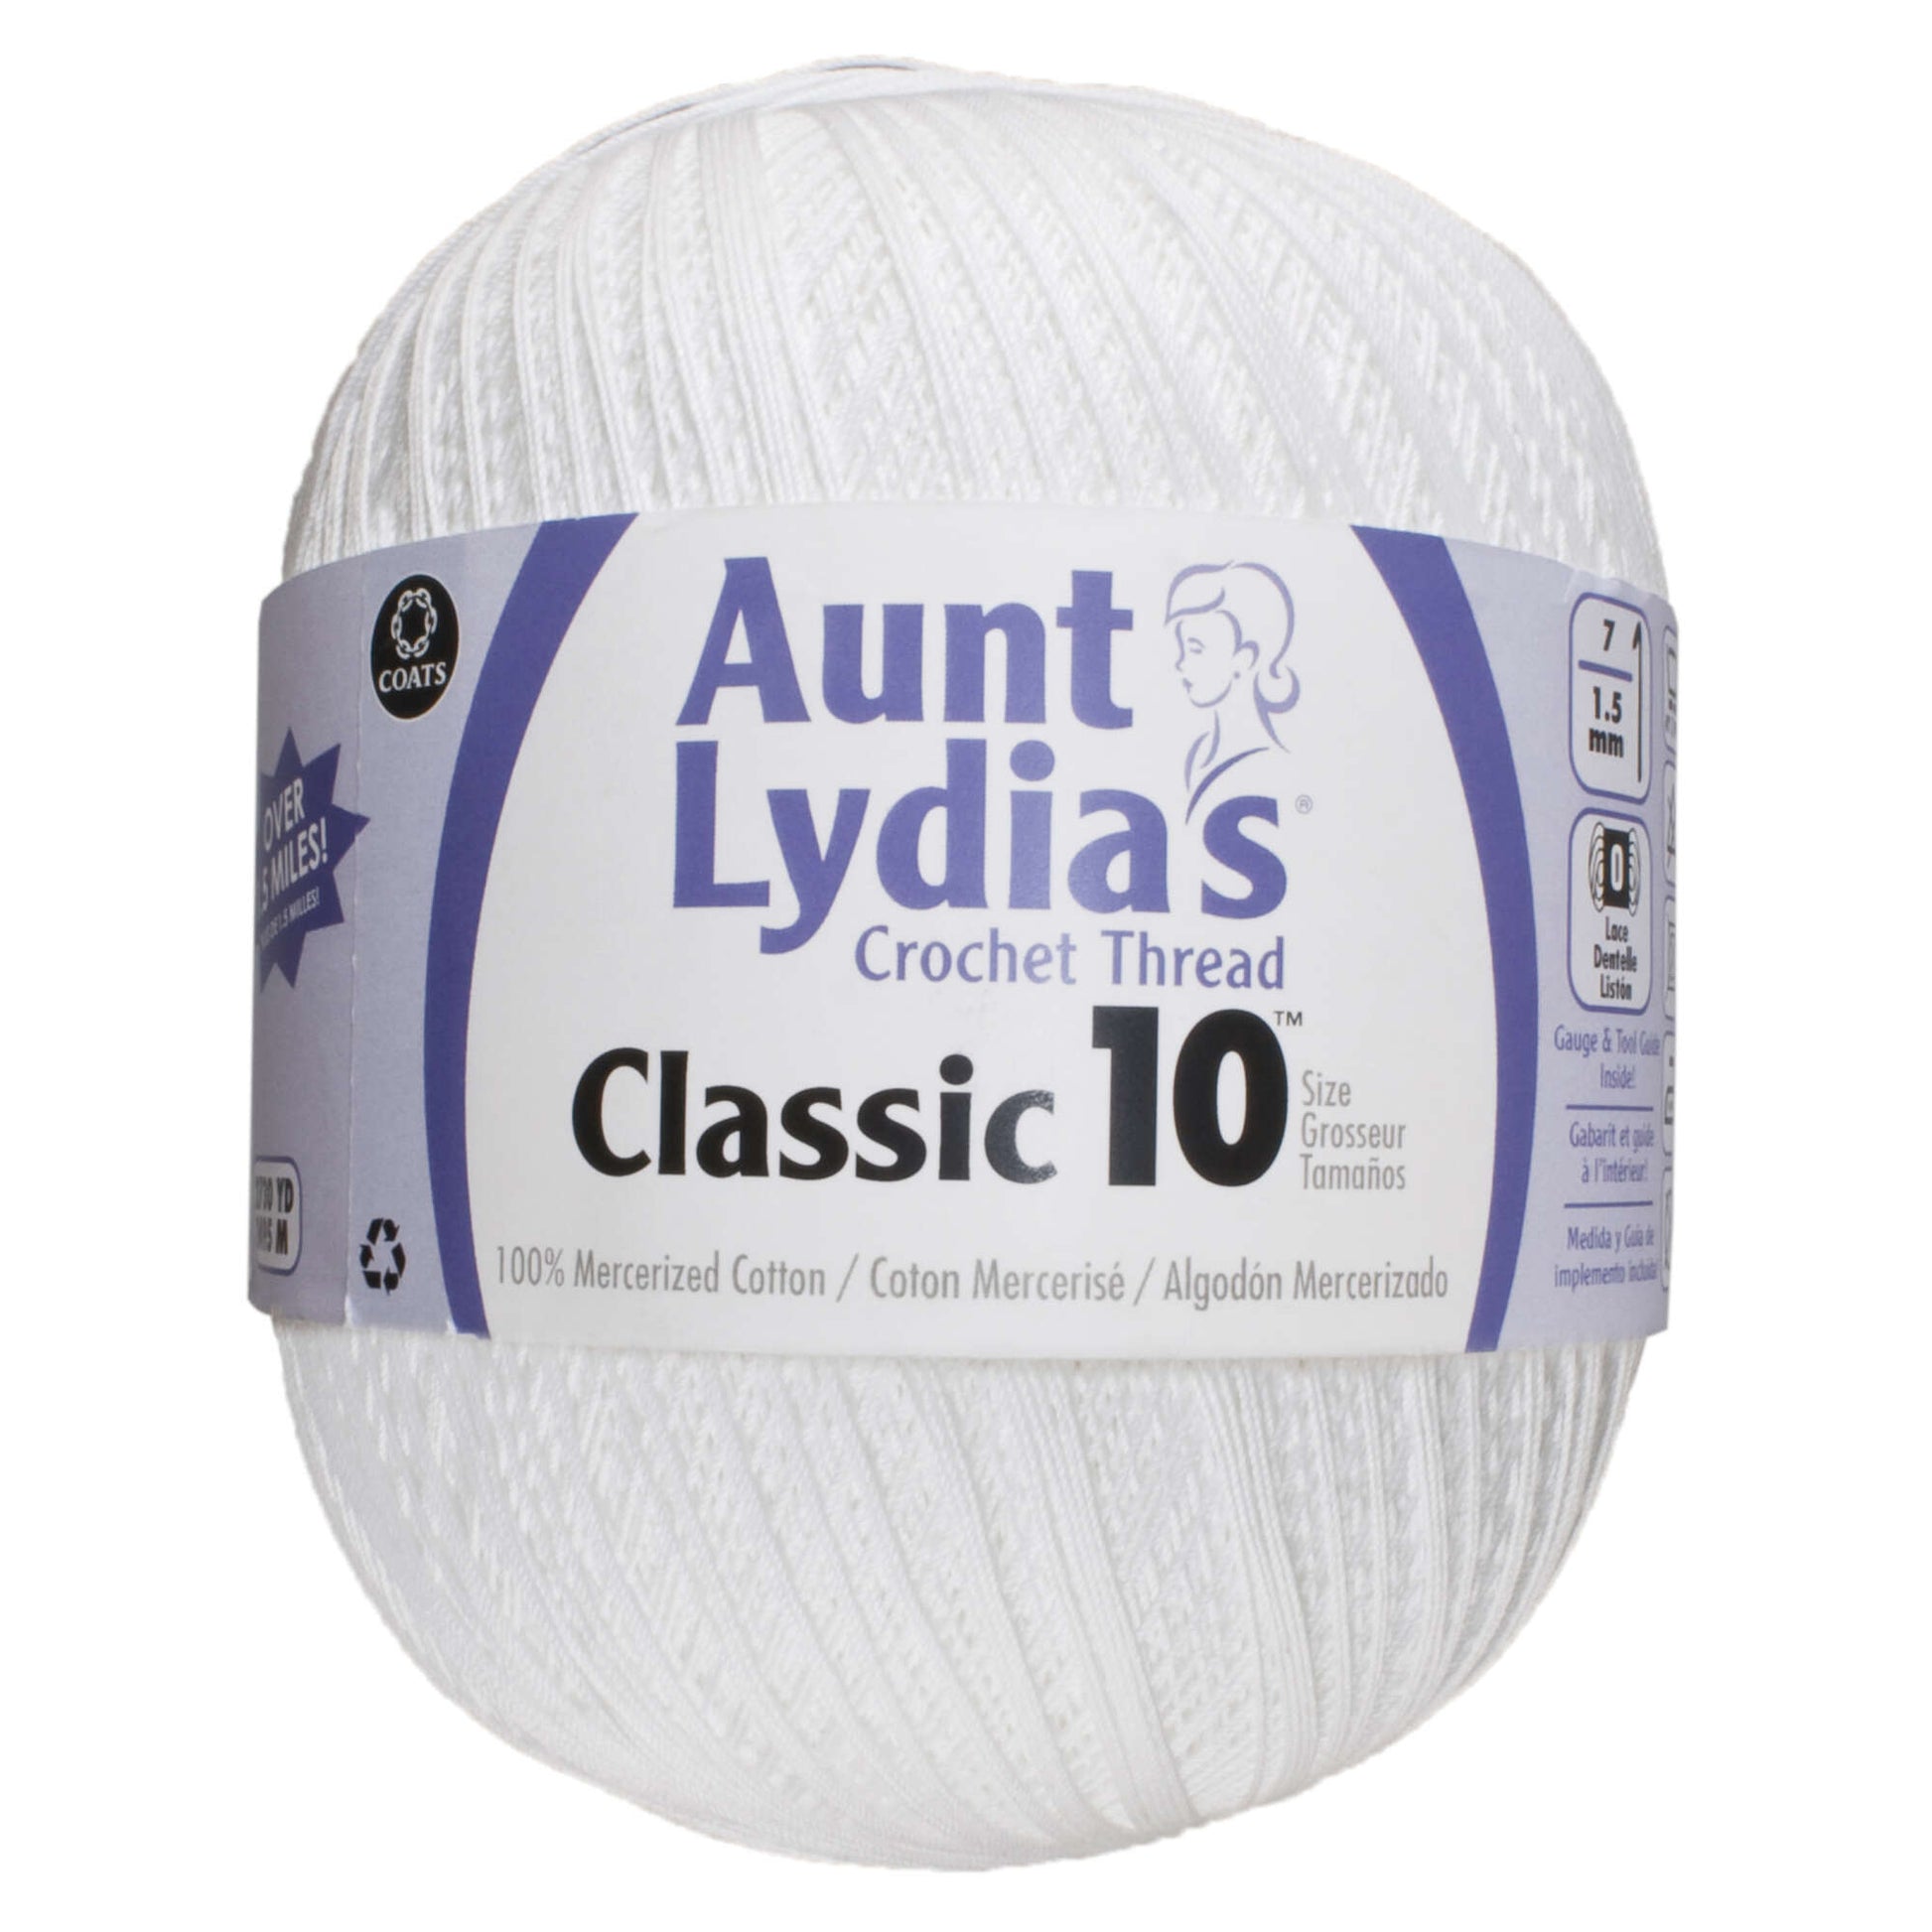 Aunt Lydia's Classic 10. Crochet Thread Lace. Aspen Multi Tremble